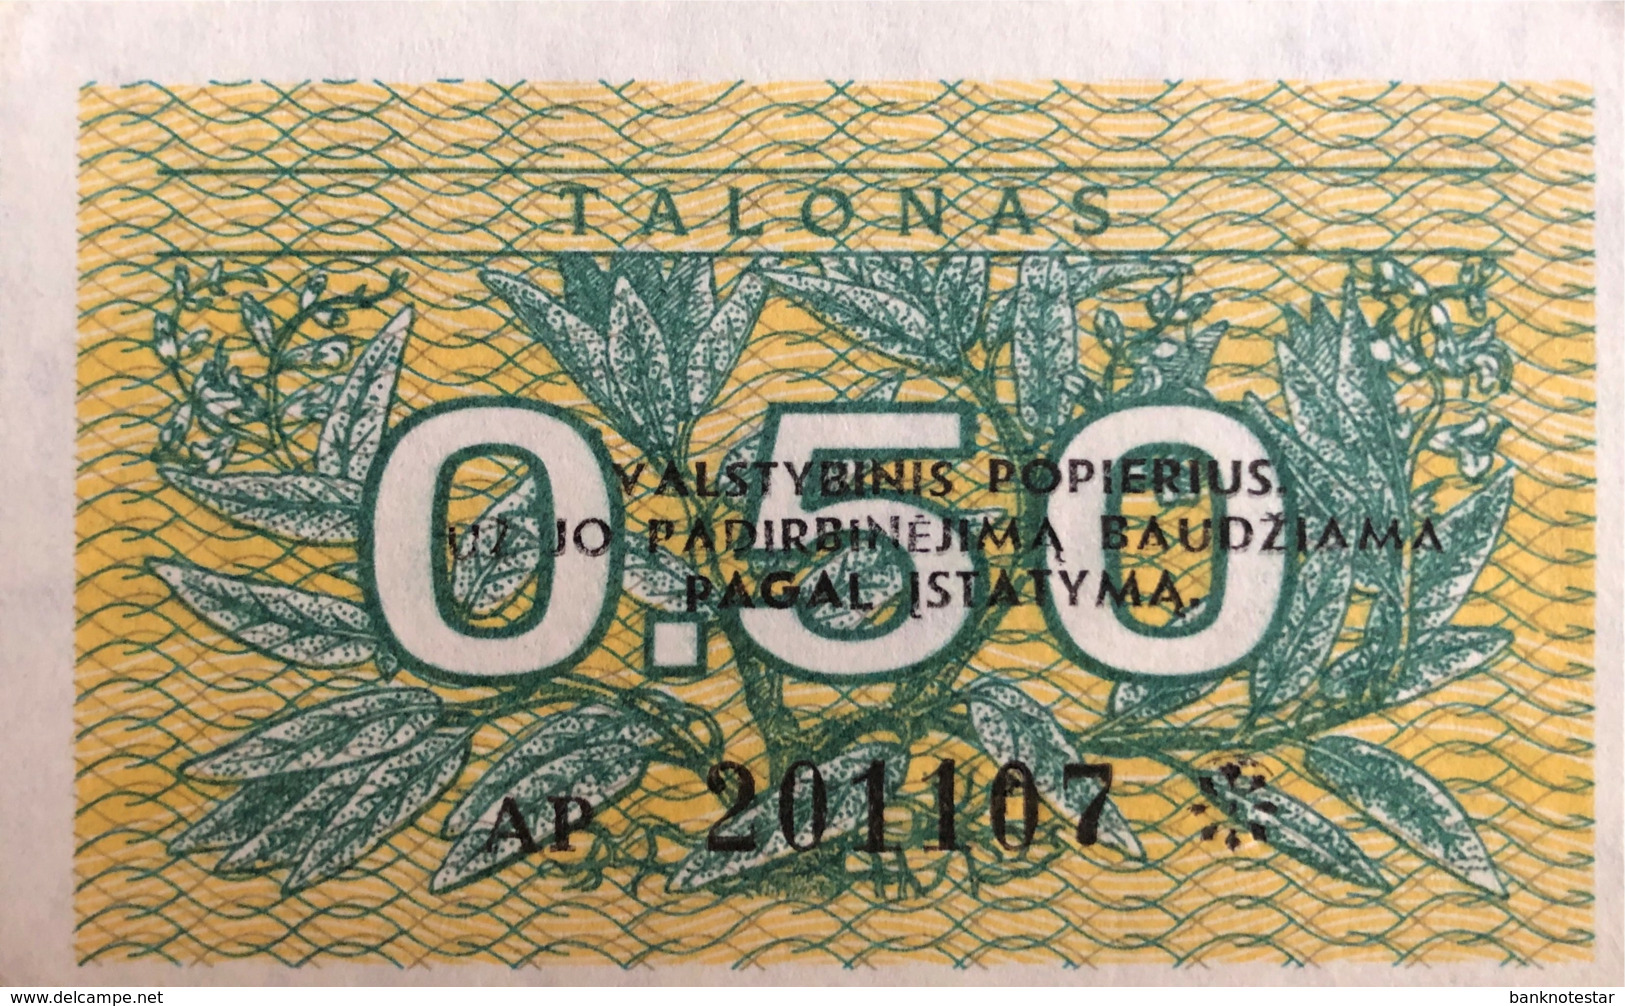 Lithuania 0.50 Talonas, P-31x1 (1991) - UNC - Error Print "Valstybinis" - Litauen